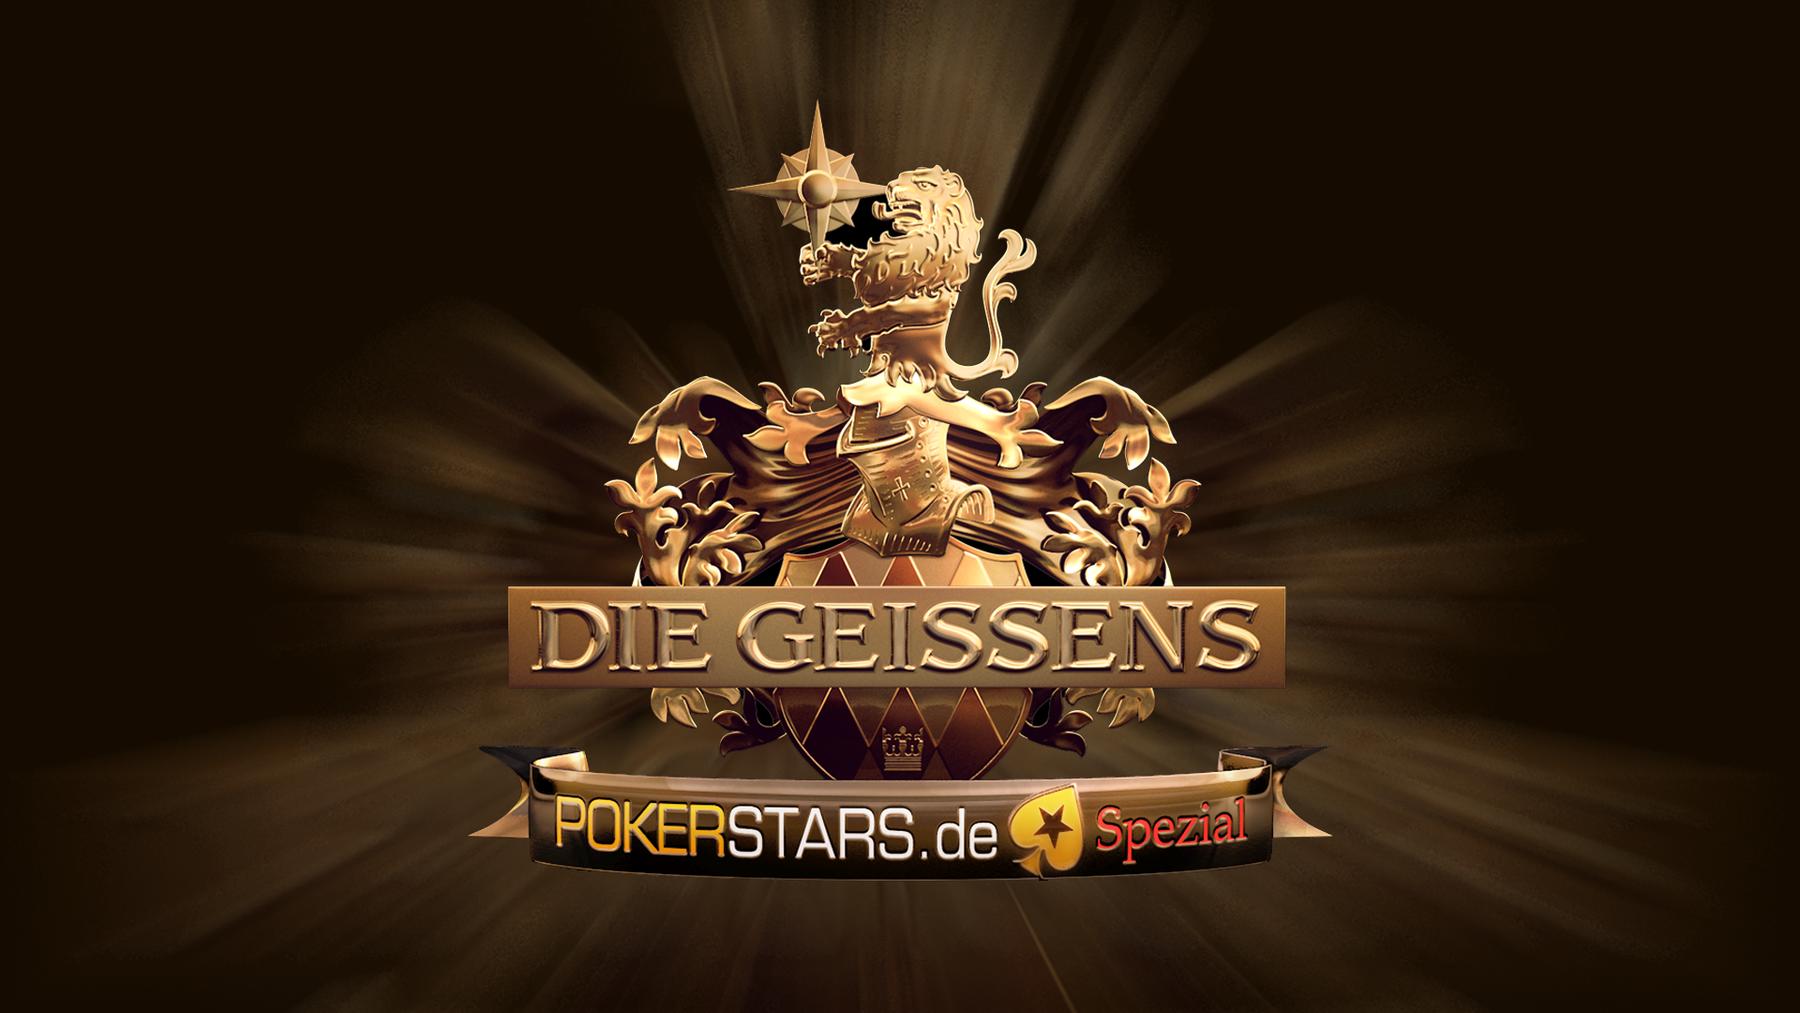 Die Geissens - PokerStars.de Spezial